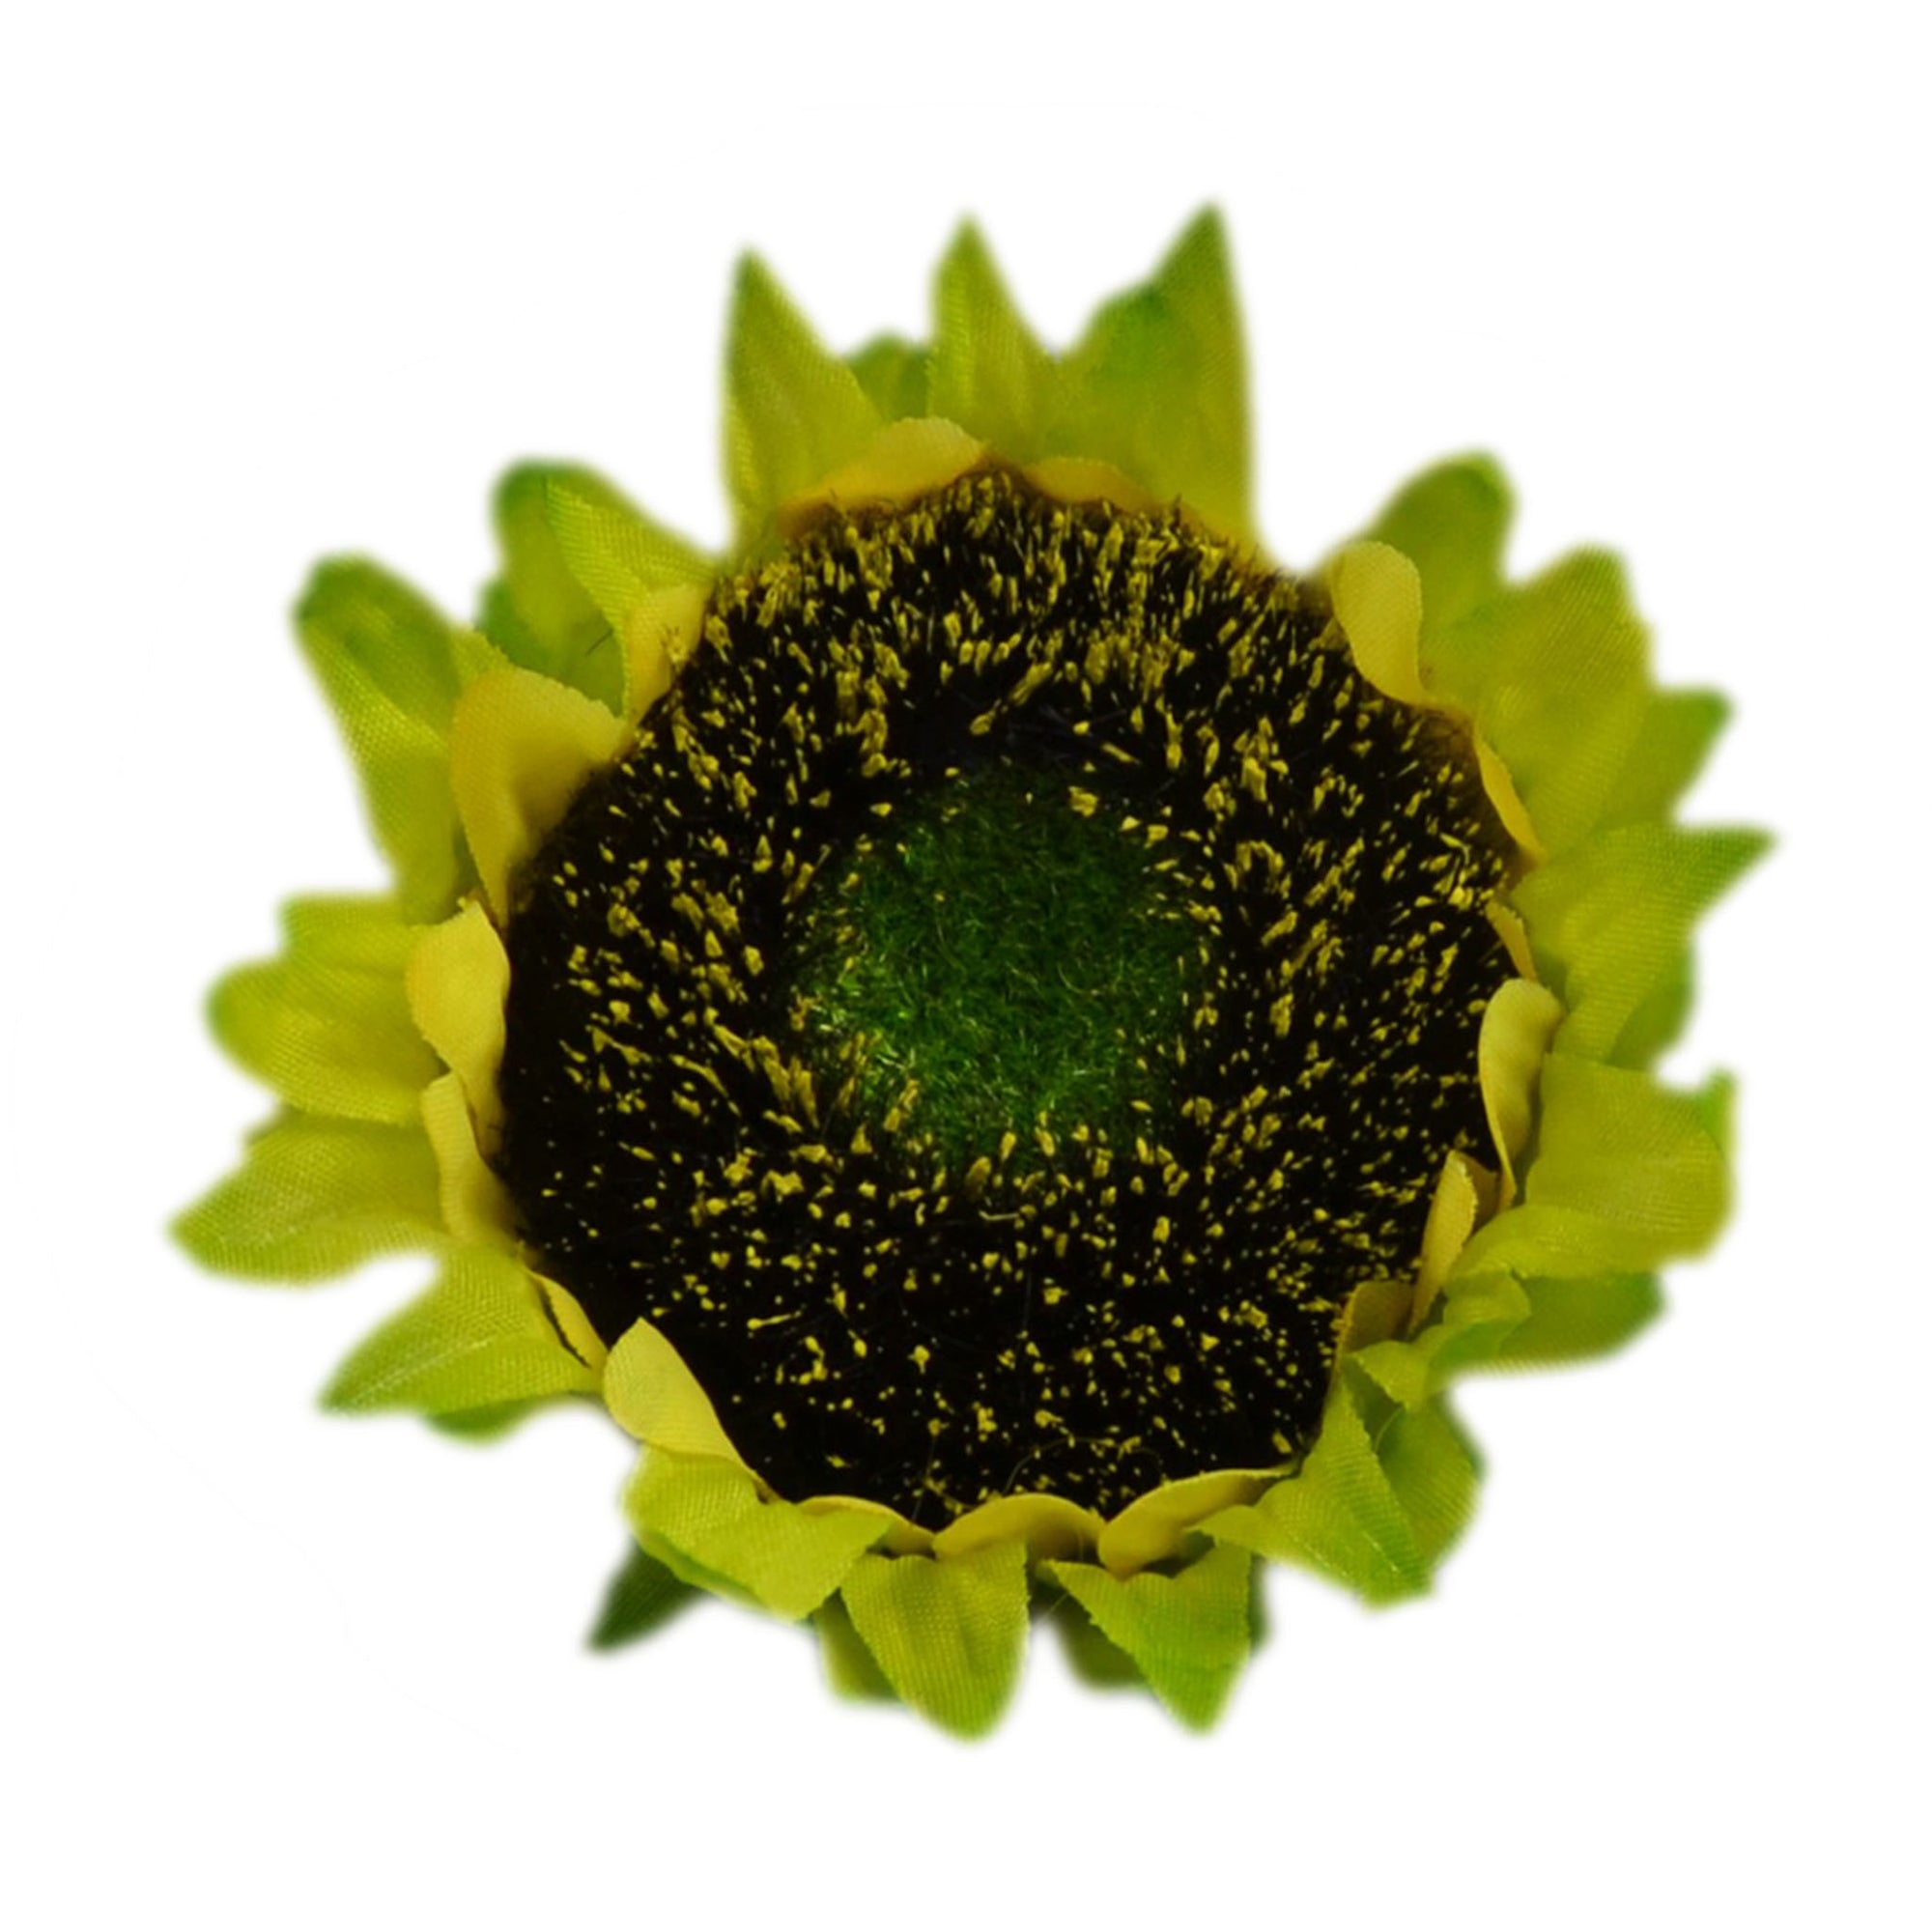 Fake Sunflowers Bulk Silk Flowers 2.7-10 inch